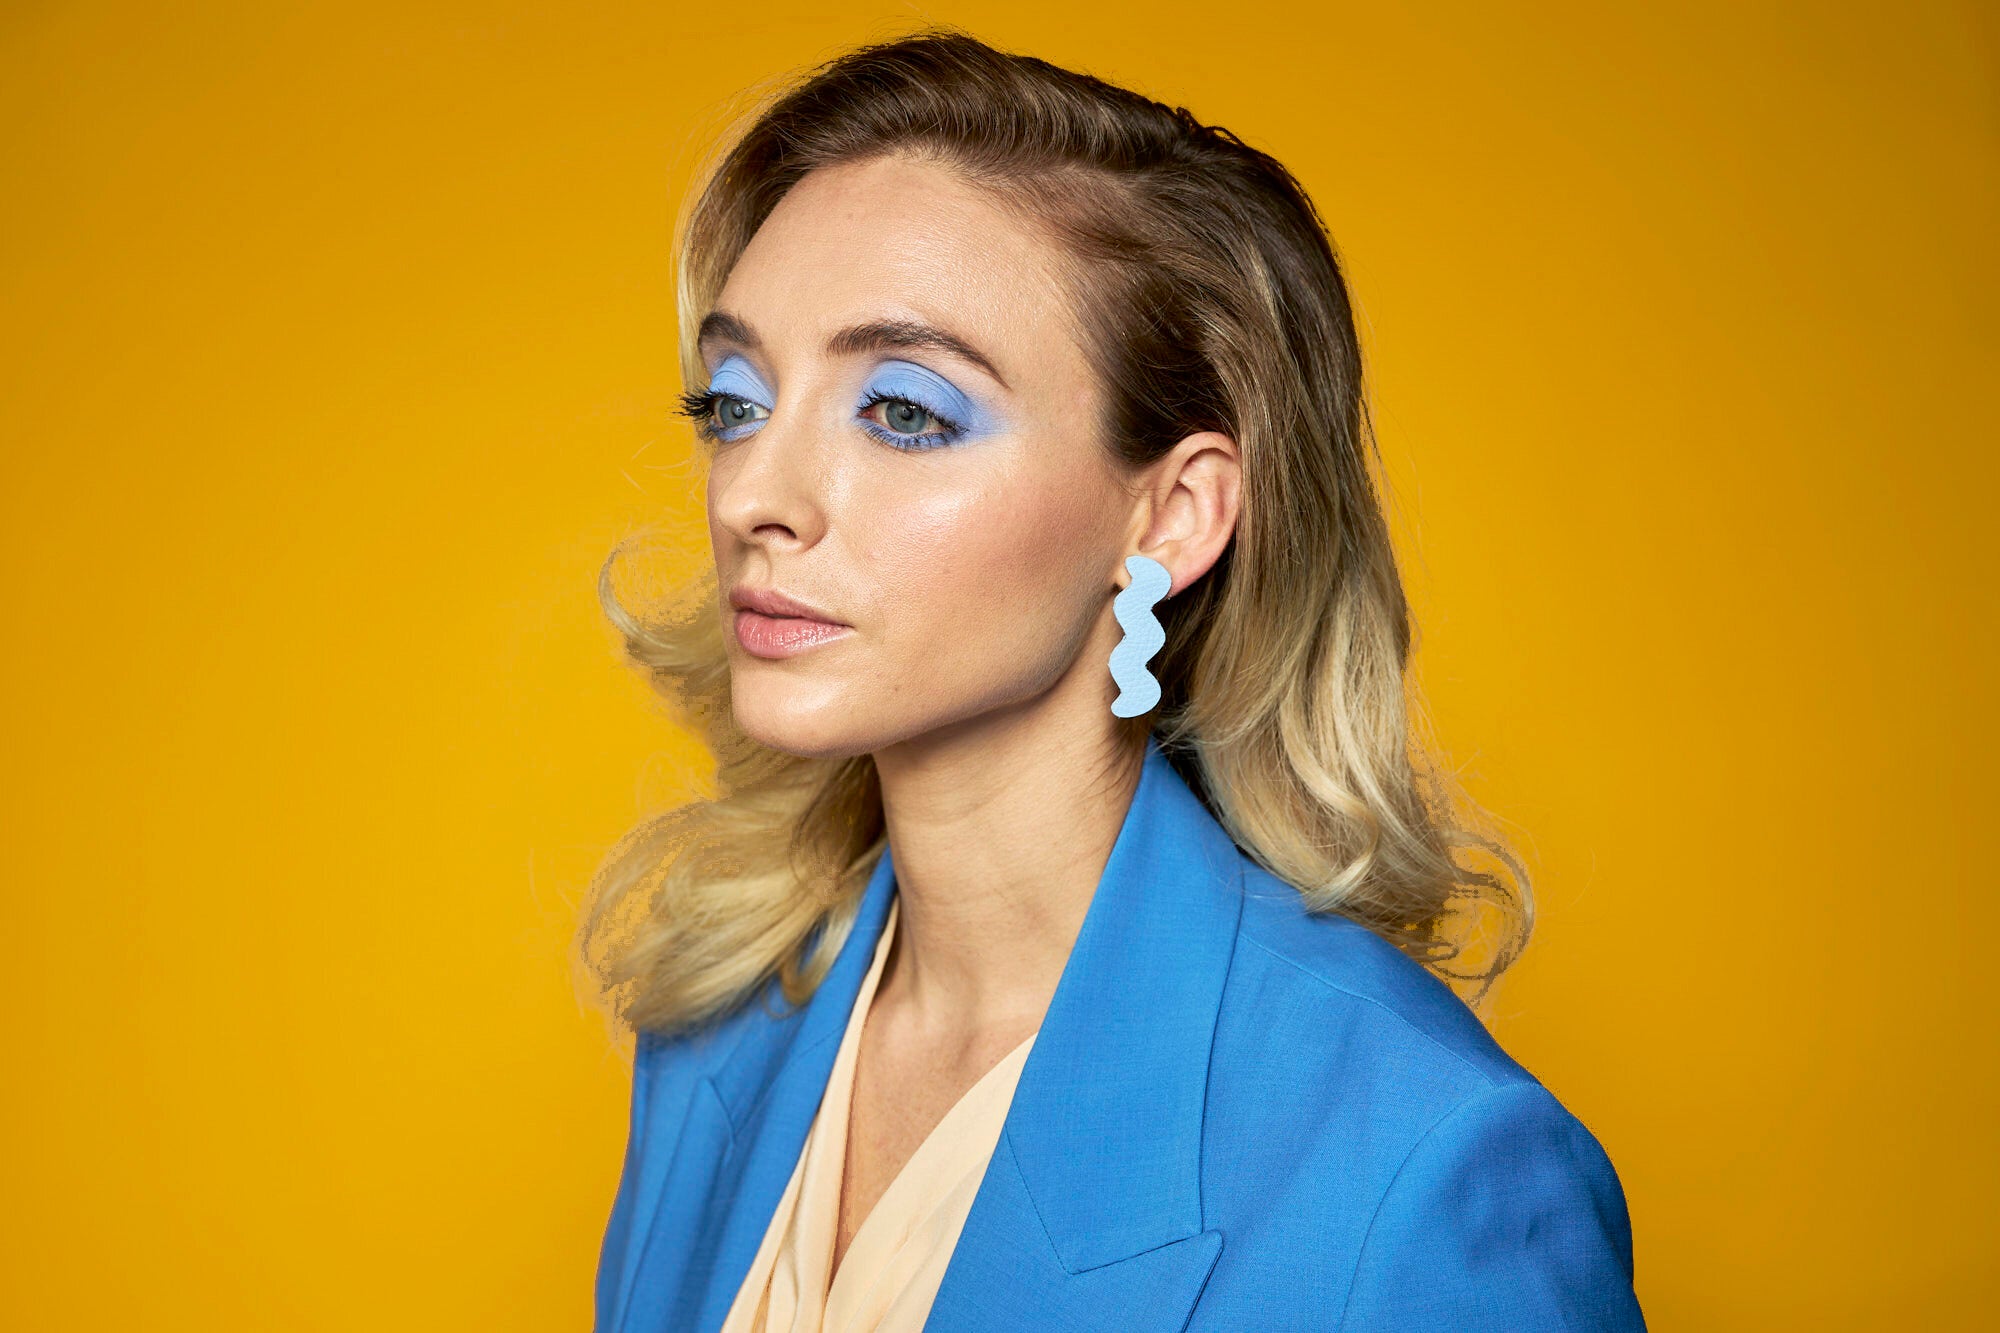 A blonde woman with bold blue makeup wears monochrome dangling periwinkle blue ear rings.